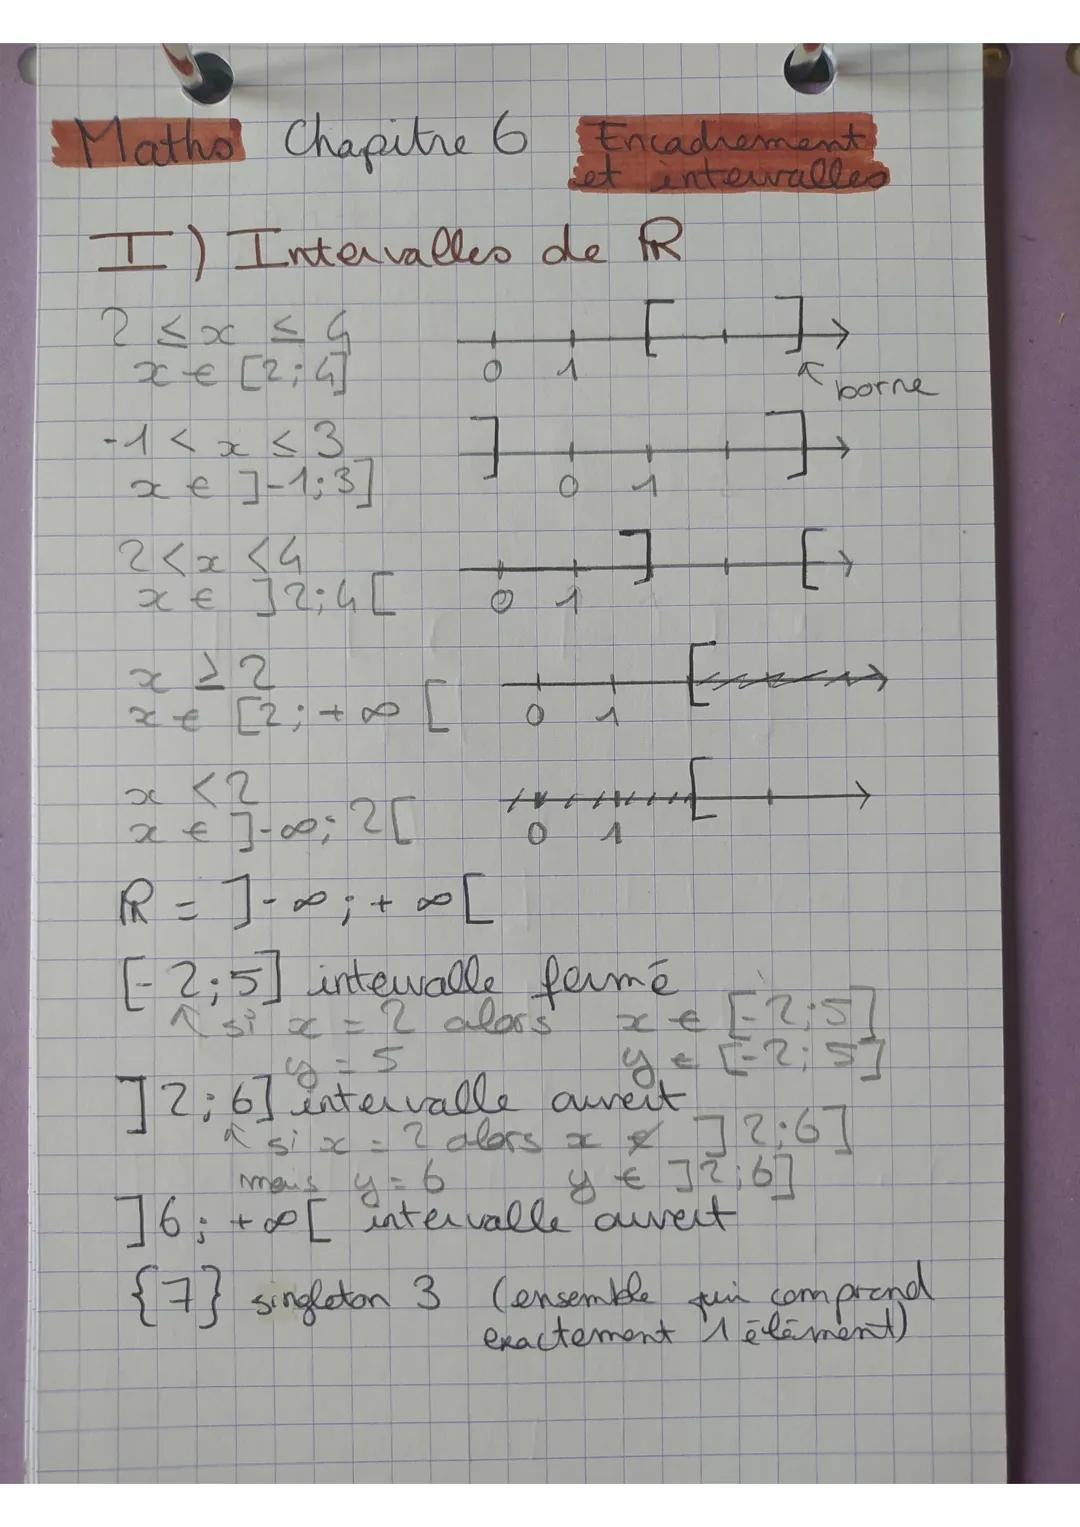 Maths Chapitre 6 Encadrement
Eet intervalles
I) Intervalles de R
F
xe 0:47
-1<x<3
xe 1-1;3]
2<x<4
x € ]2;4[
x 22
*€ [2; +∞
[
O
+
0
1
1
+
3
x